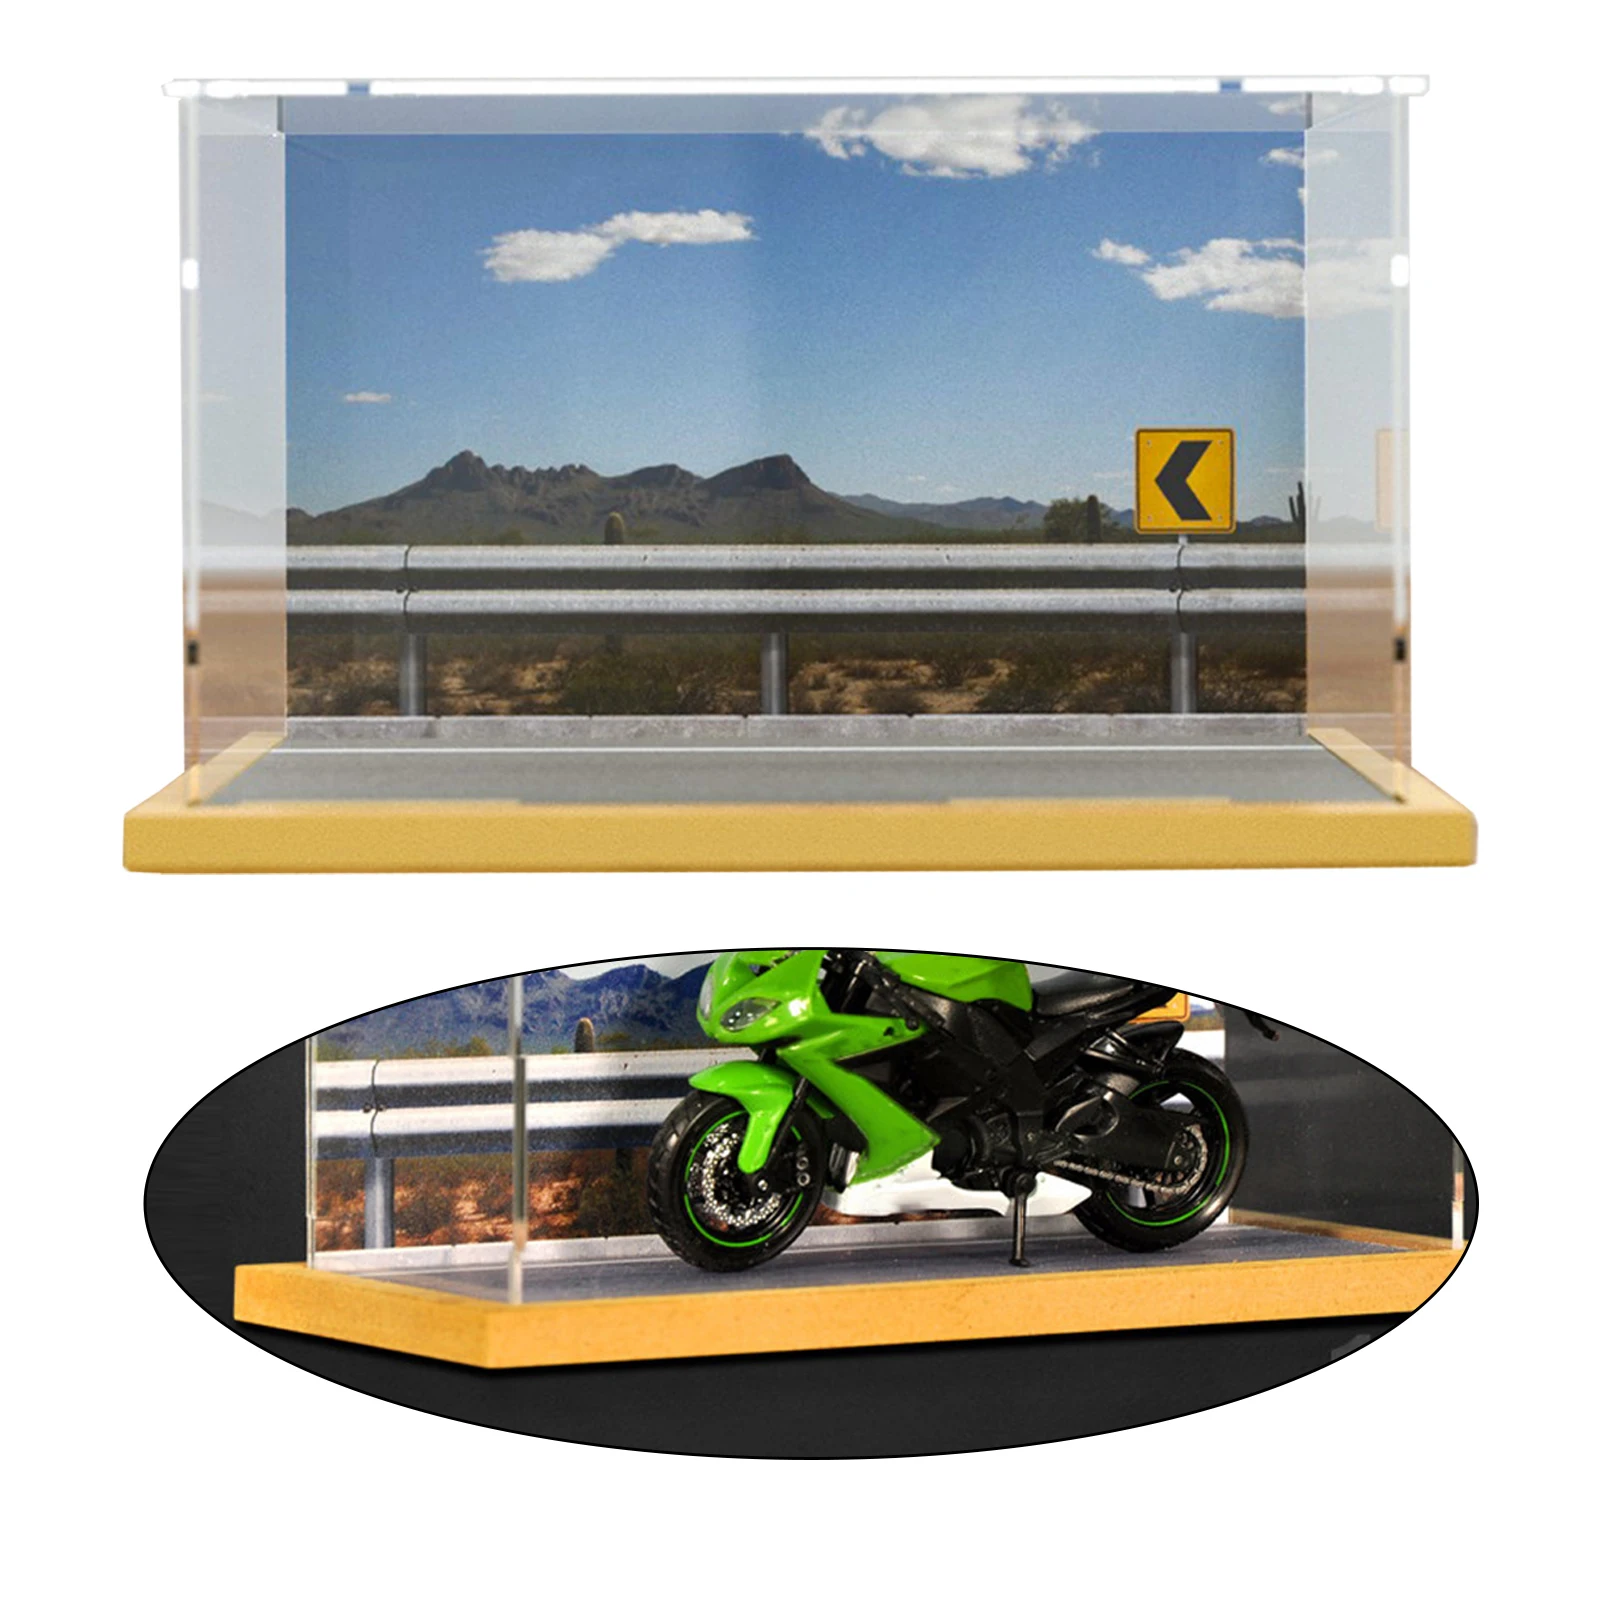 Acrylic DIY 1/18 Scale Motorcycle Model Display Case Parking Space Garage